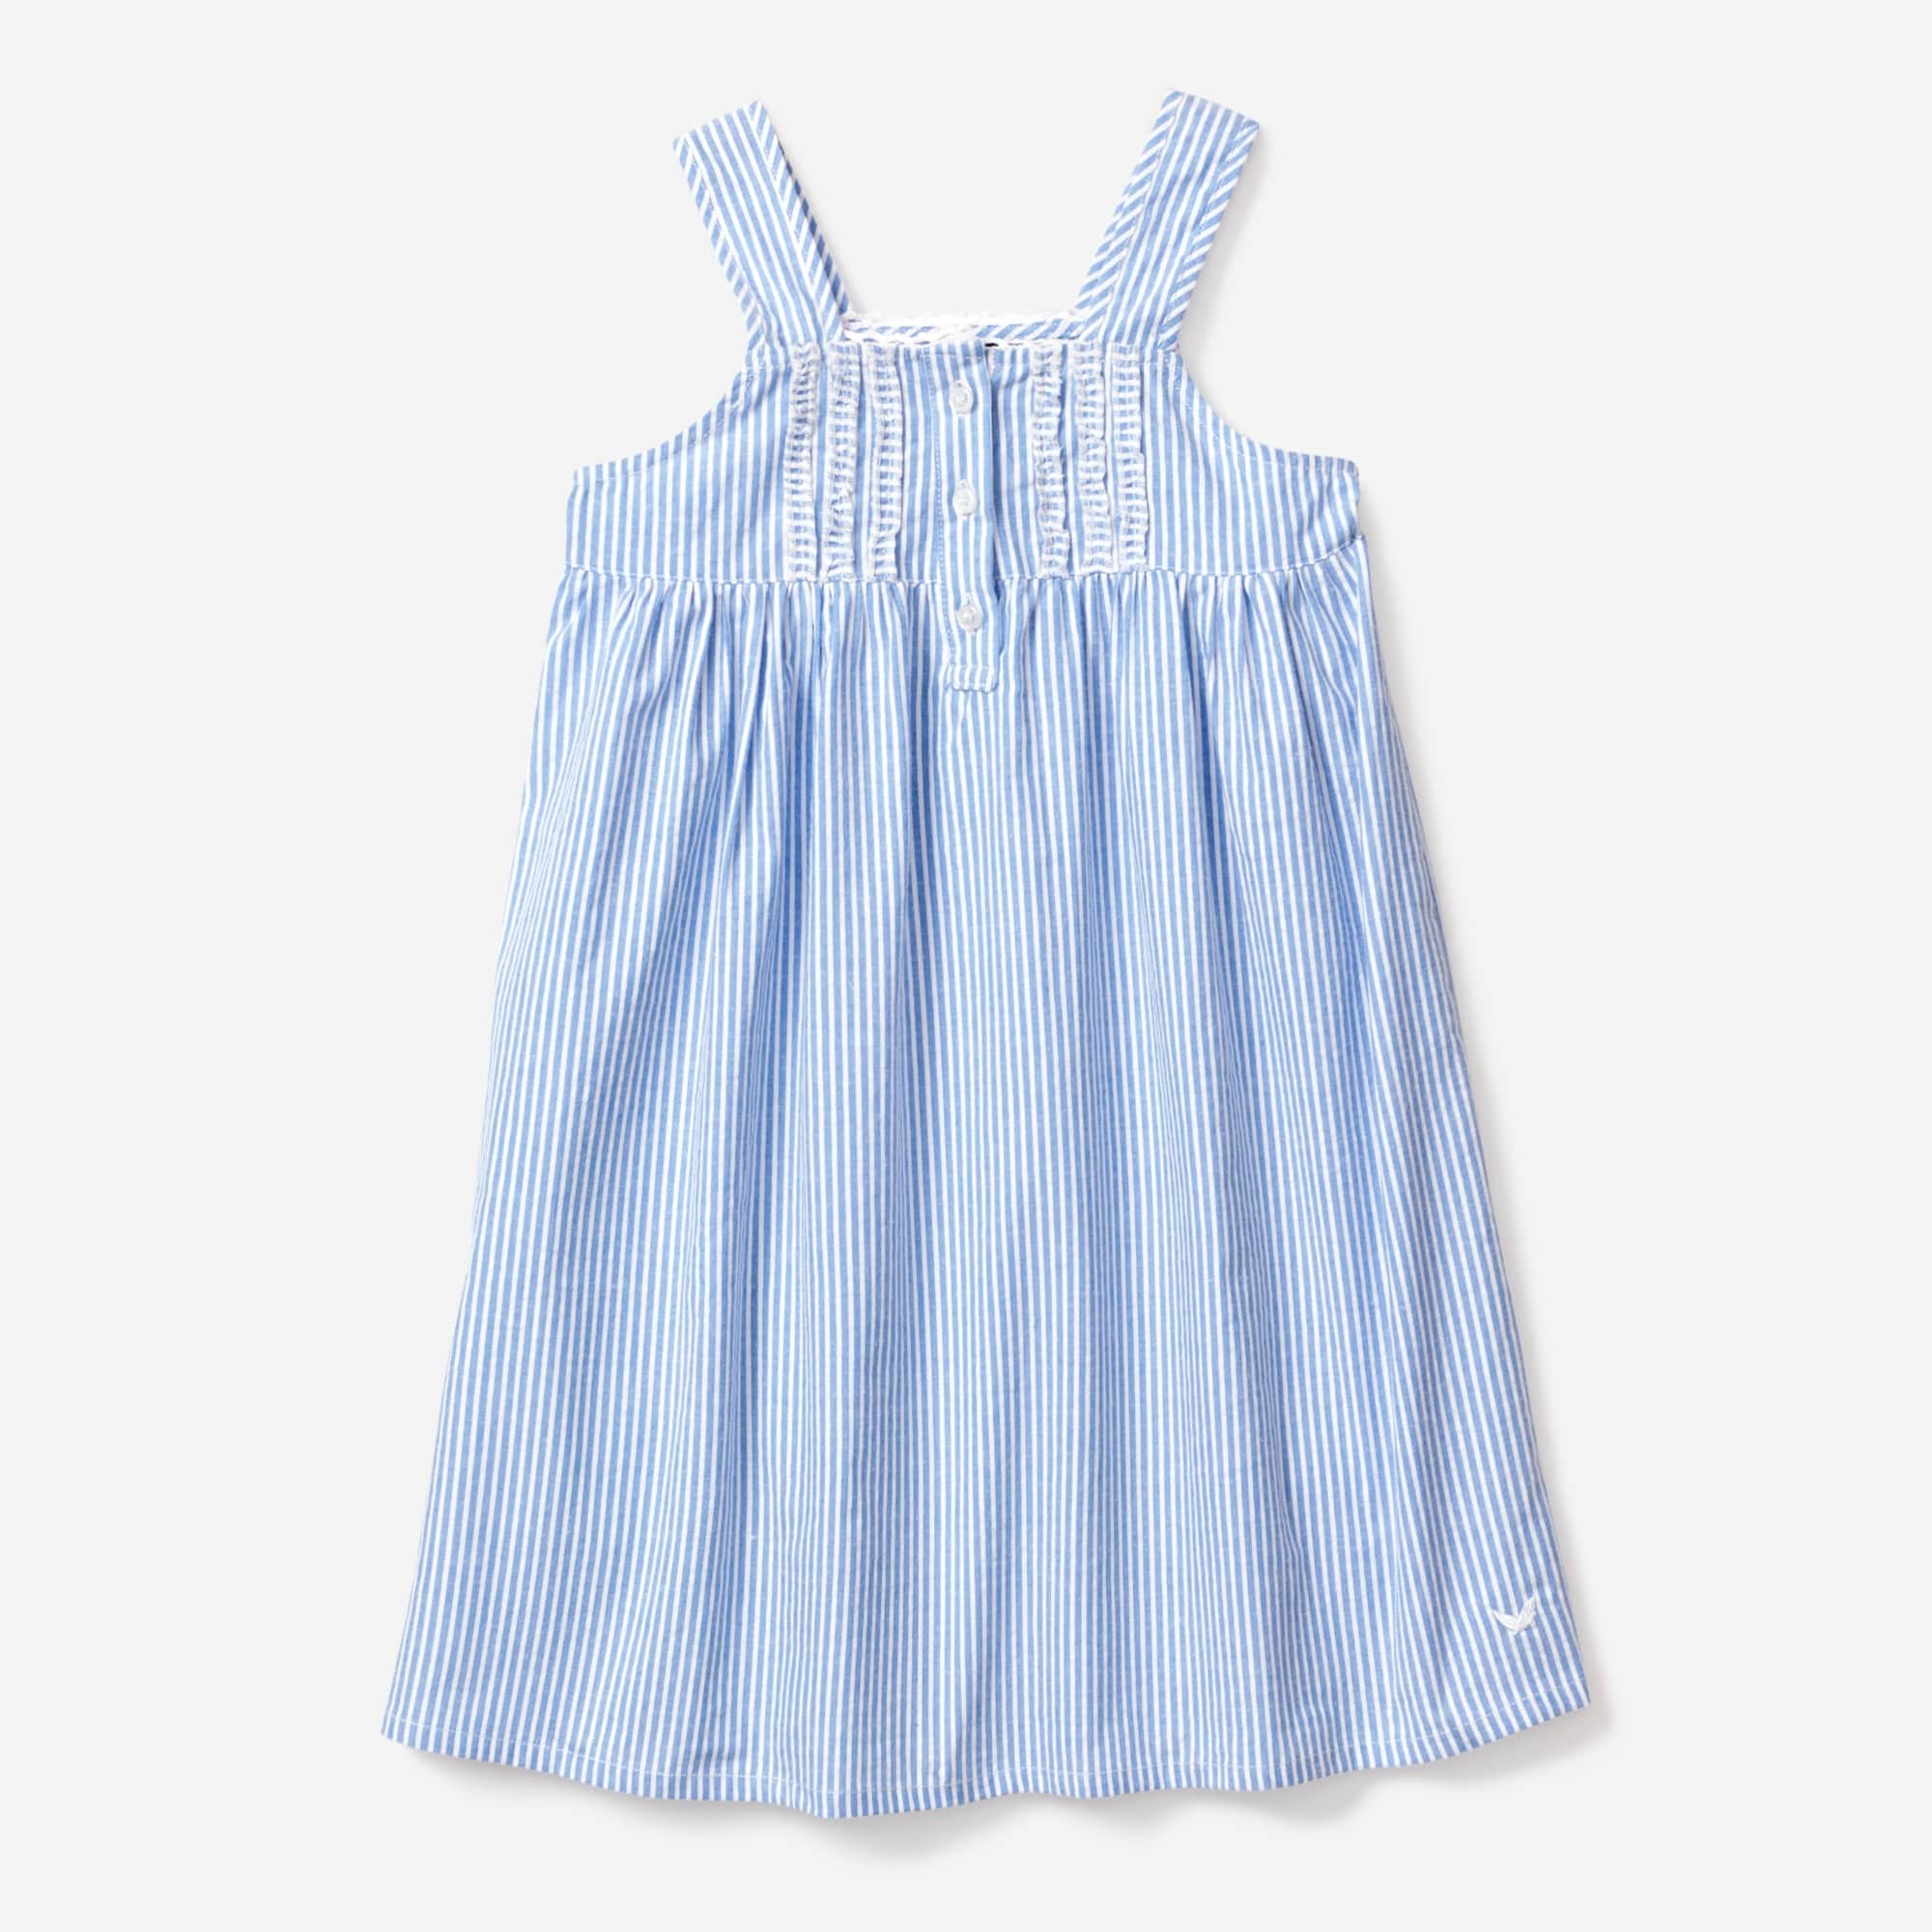  Petite Plume™ girls' Charlotte nightgown